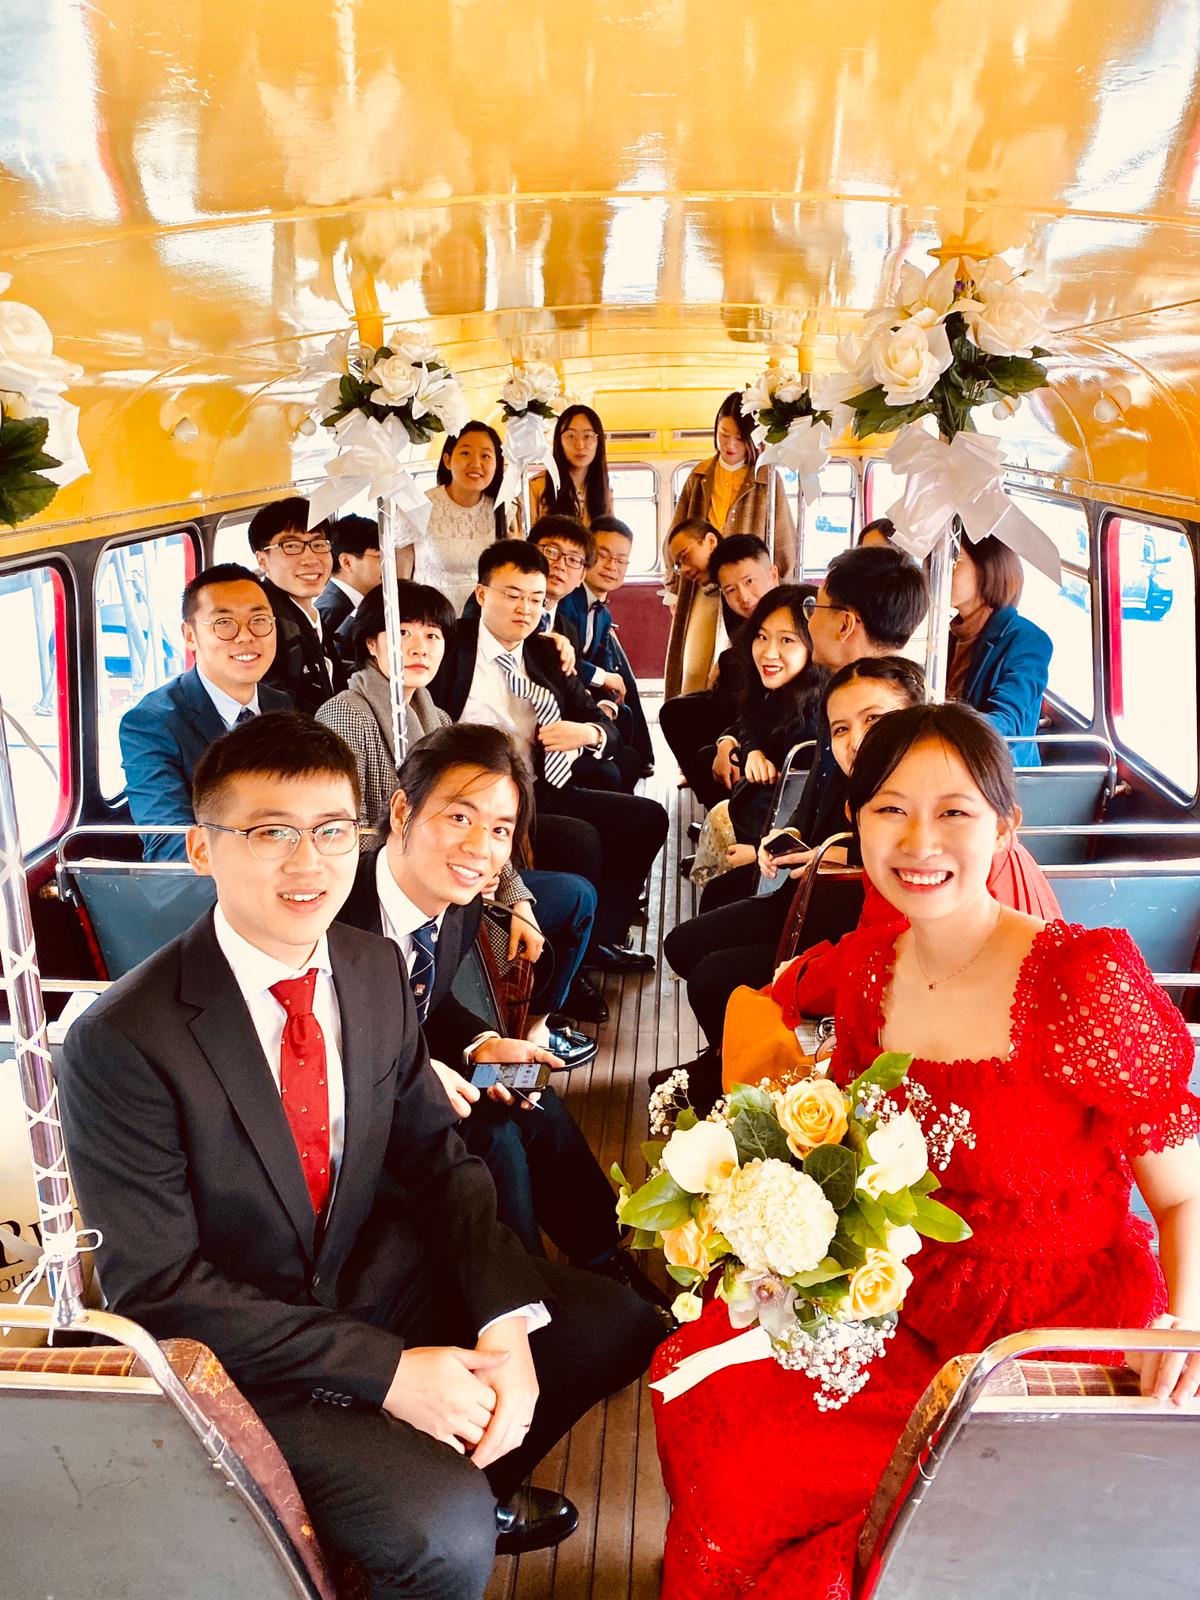 Wedding bus hire